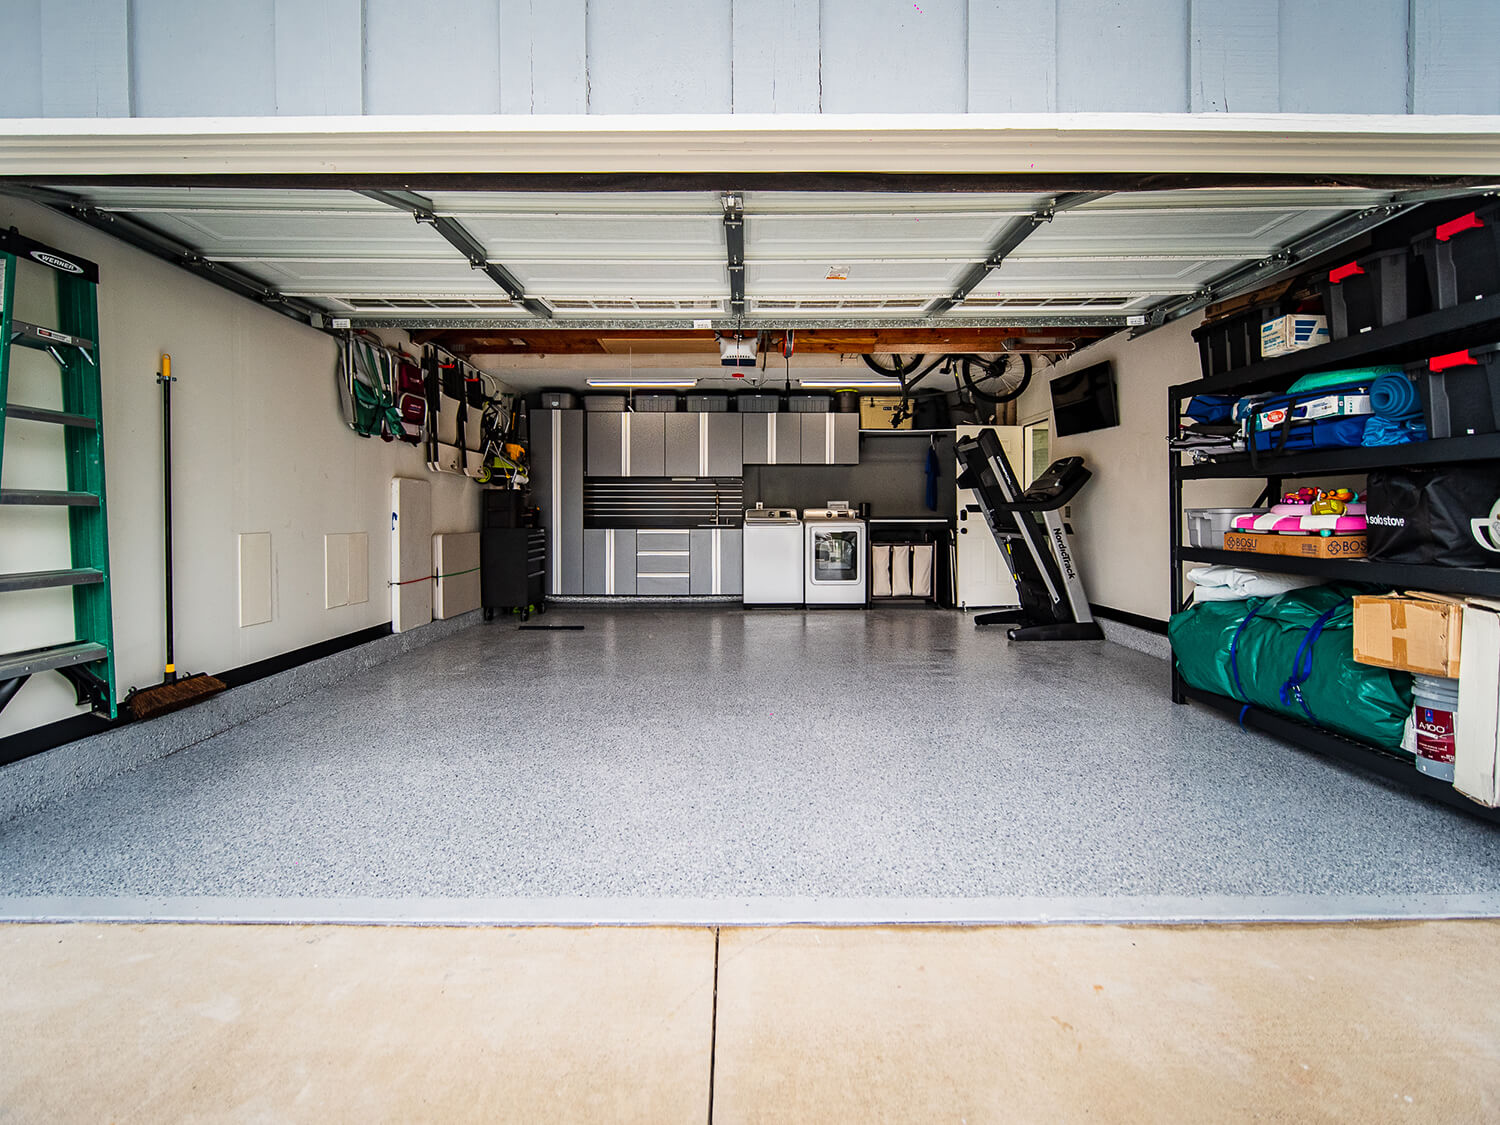 modern garage shelving ideas photo